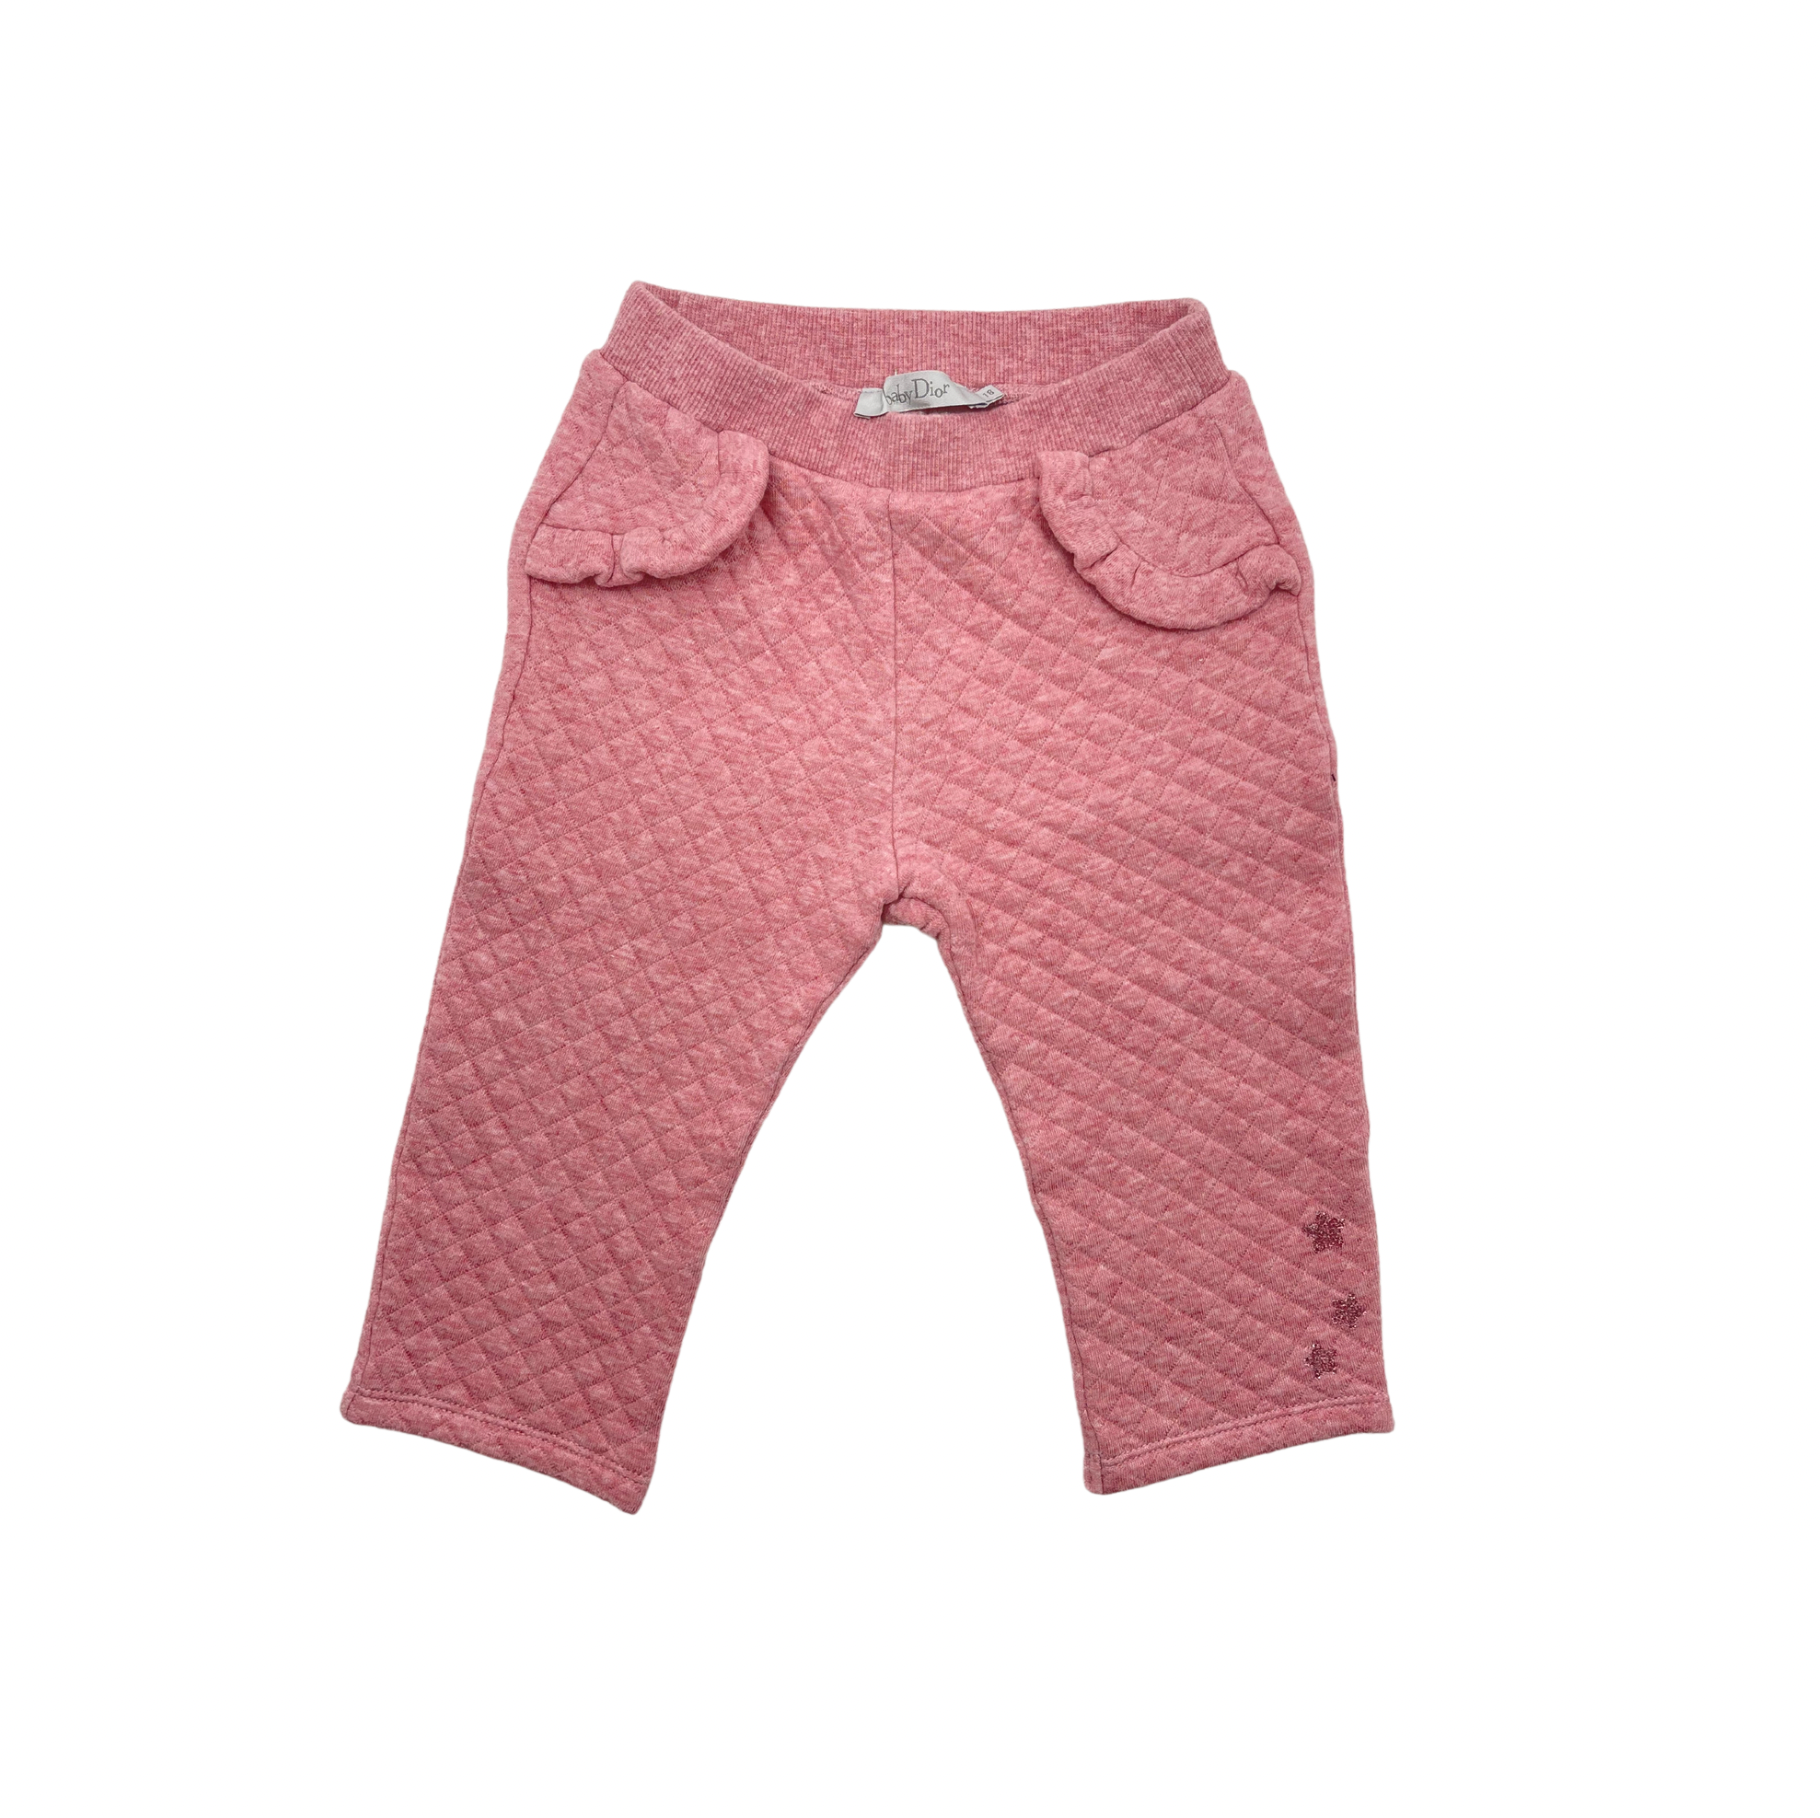 BABY DIOR - Pantalon rose - 18 mois